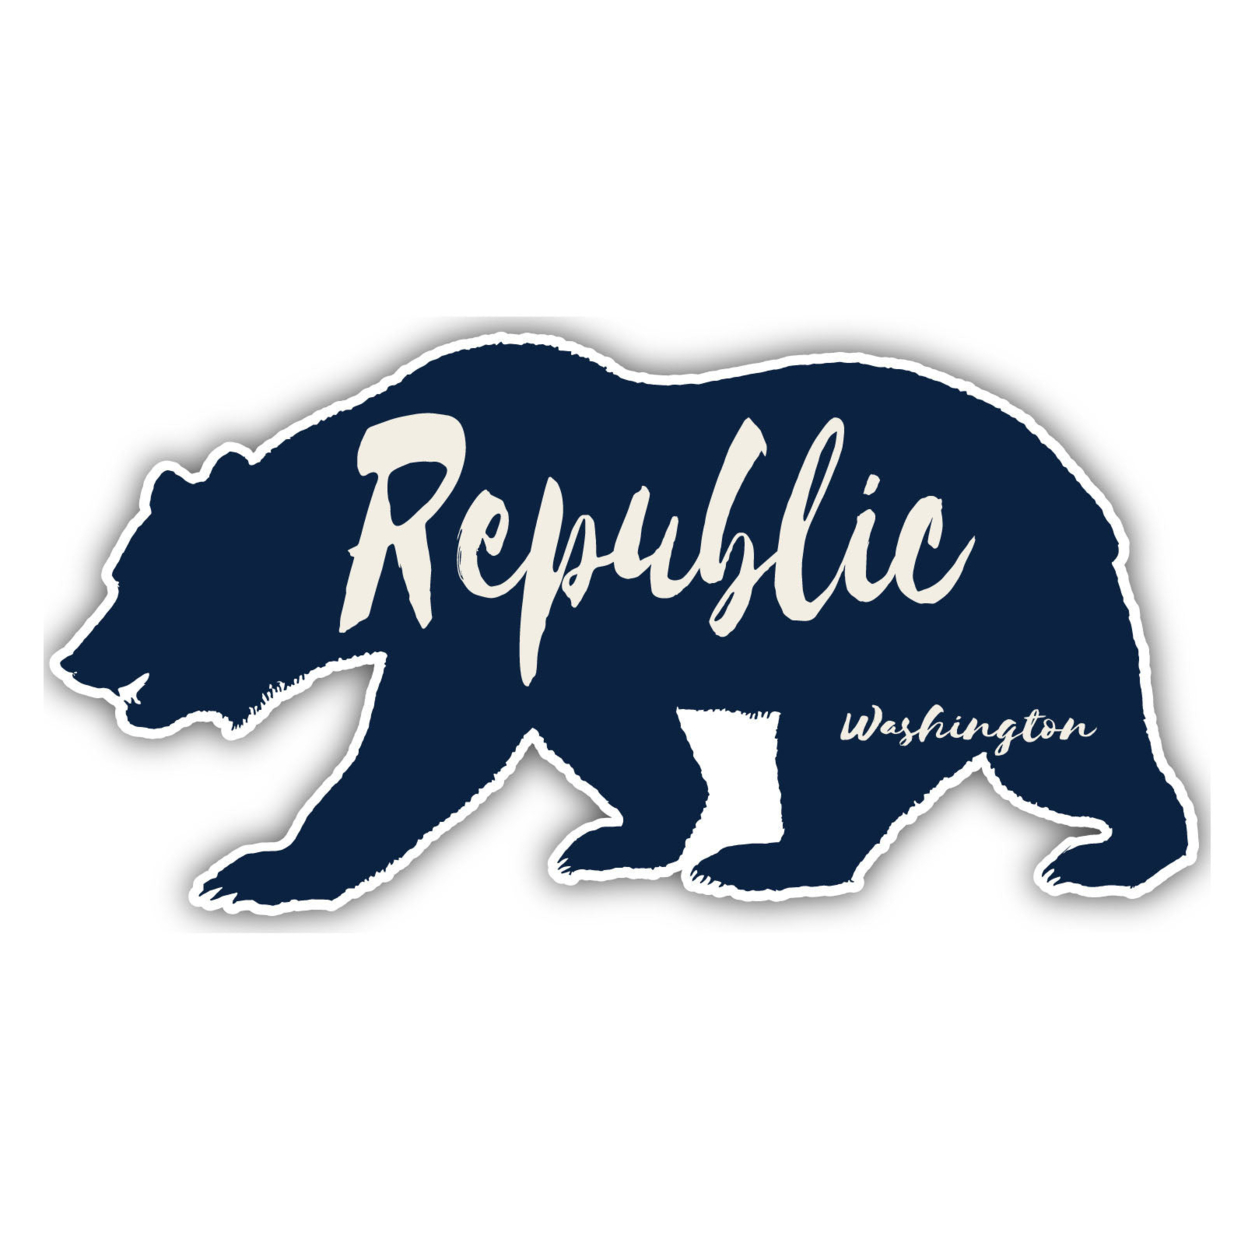 Republic Washington Souvenir Decorative Stickers (Choose Theme And Size) - Single Unit, 2-Inch, Bear